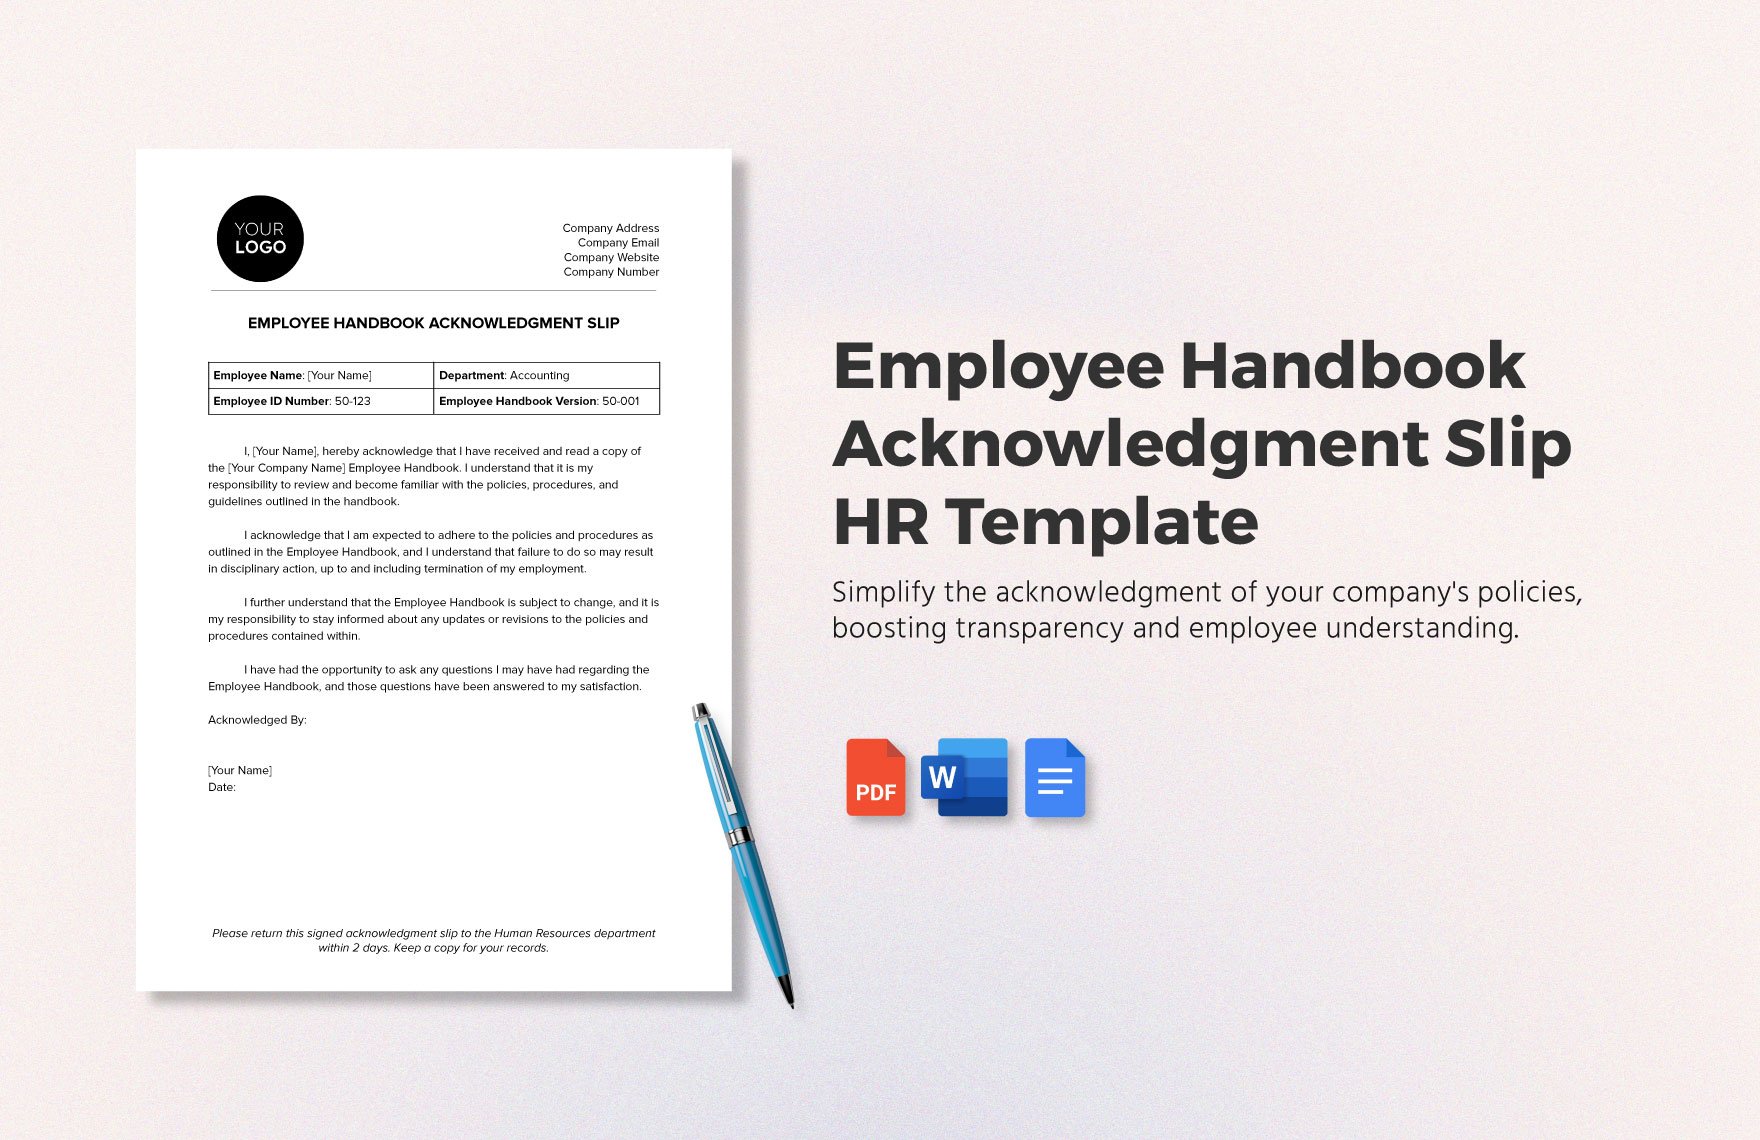 Employee Handbook Acknowledgment Slip HR Template in Word, Google Docs, PDF